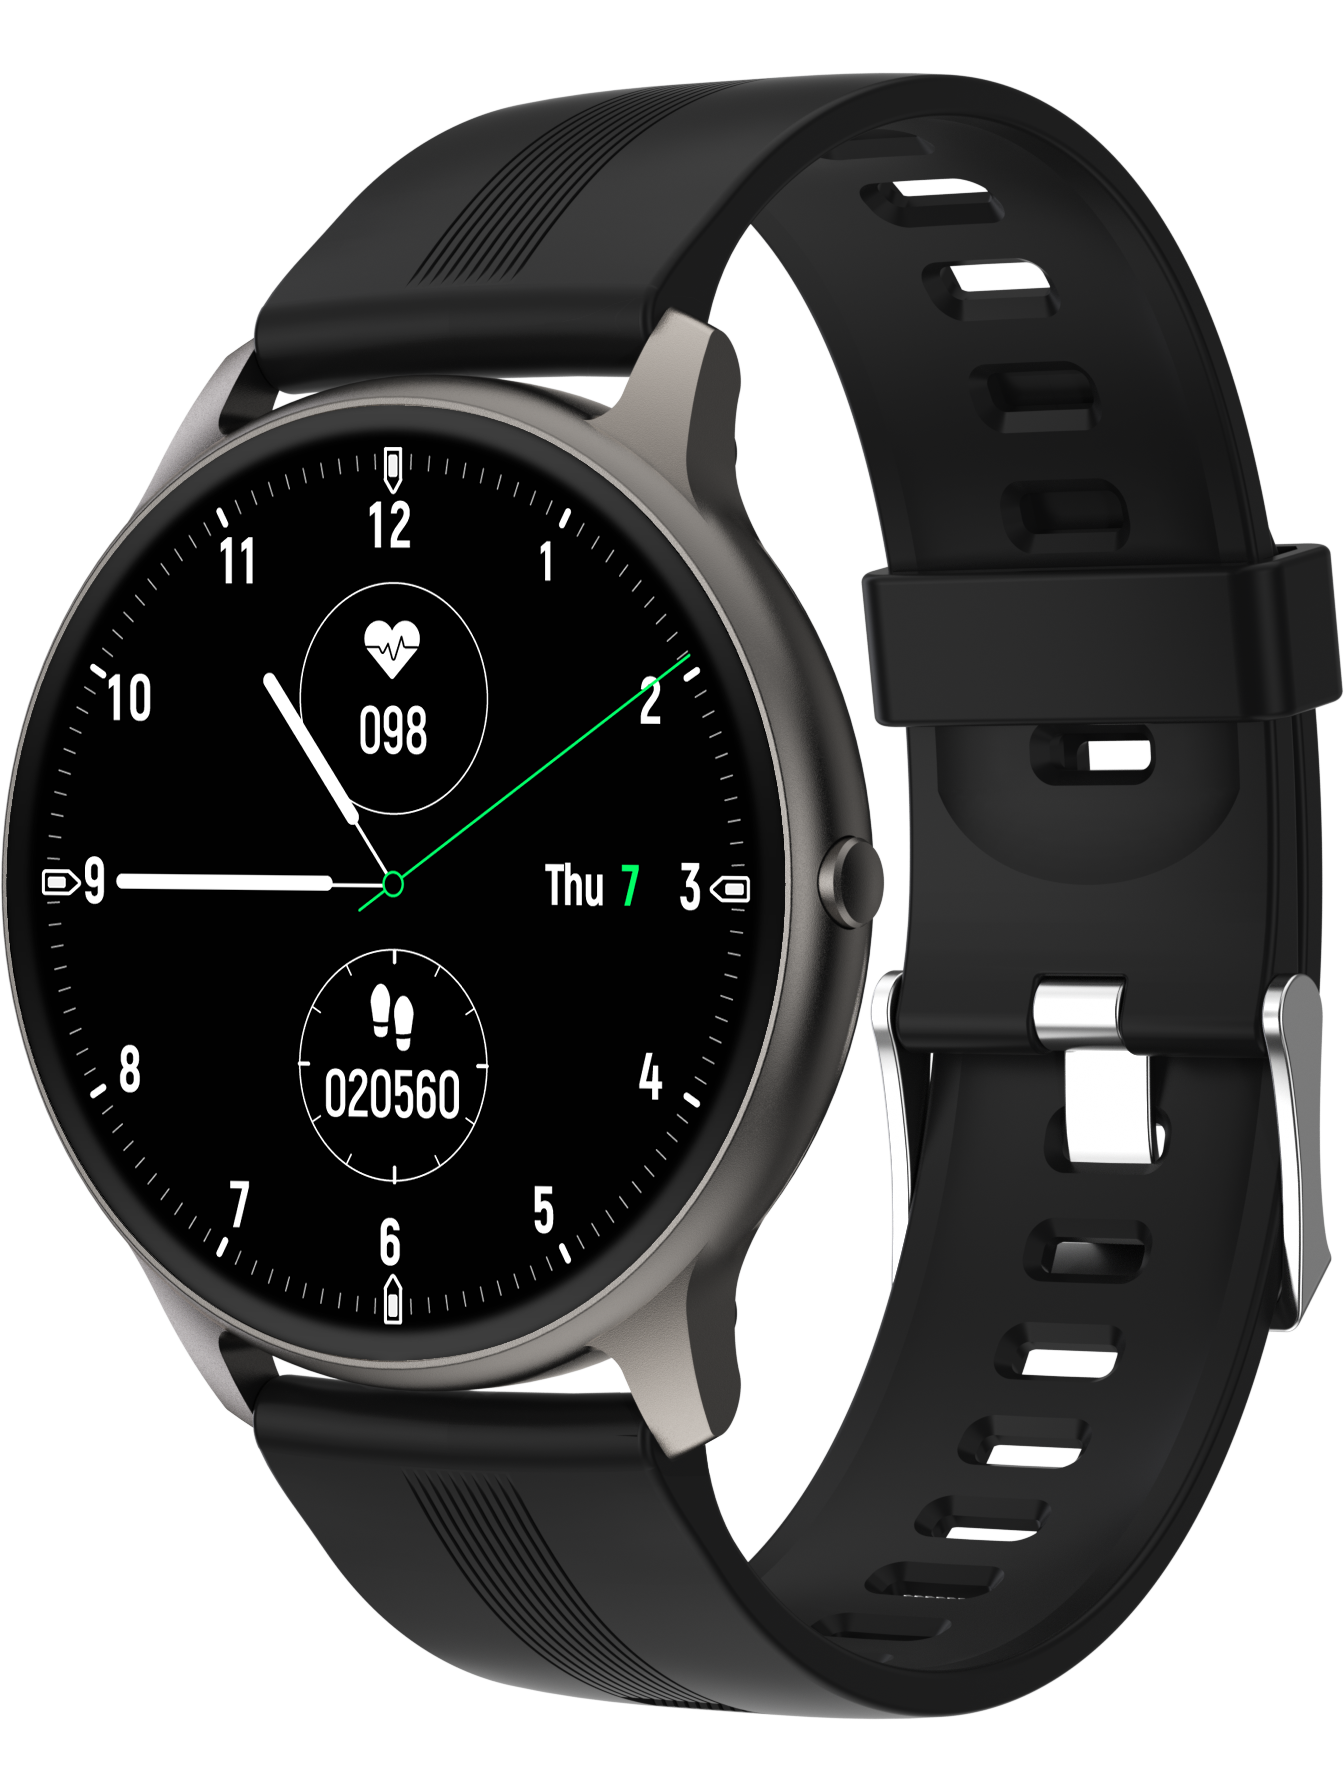 Cмарт-часы Smart Watch LW11